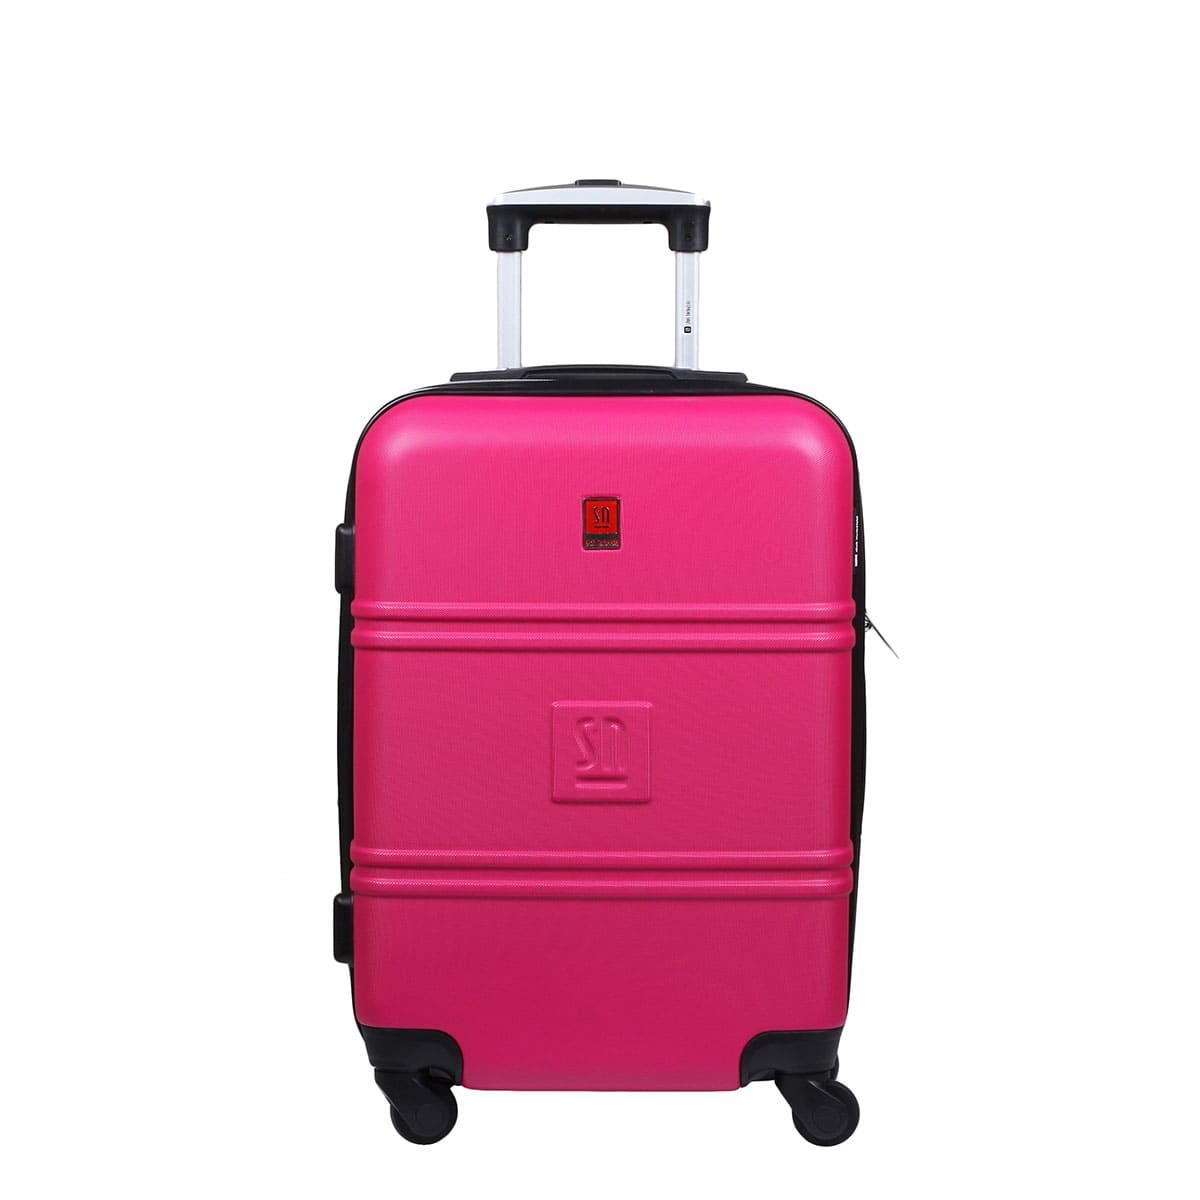 rozowa-walizka-podrozna-kabinowa-na-kolkach-Art-Class-04-0411K-09.jpg